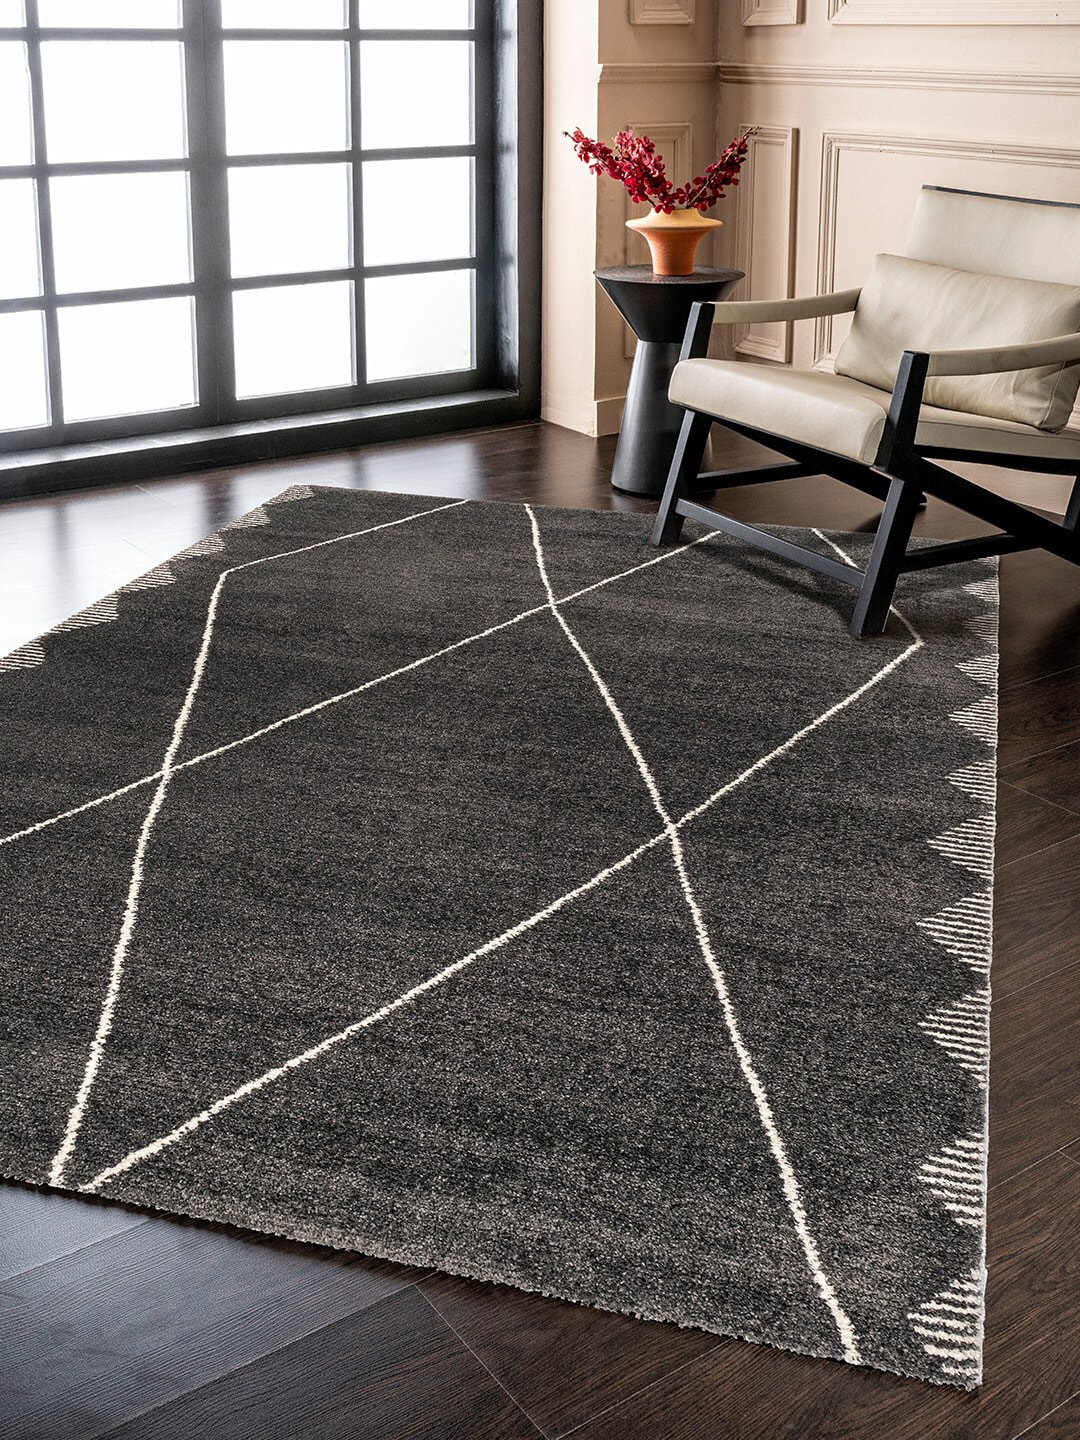 DDecor Charcoal Grey Geometric Carpet Price in India